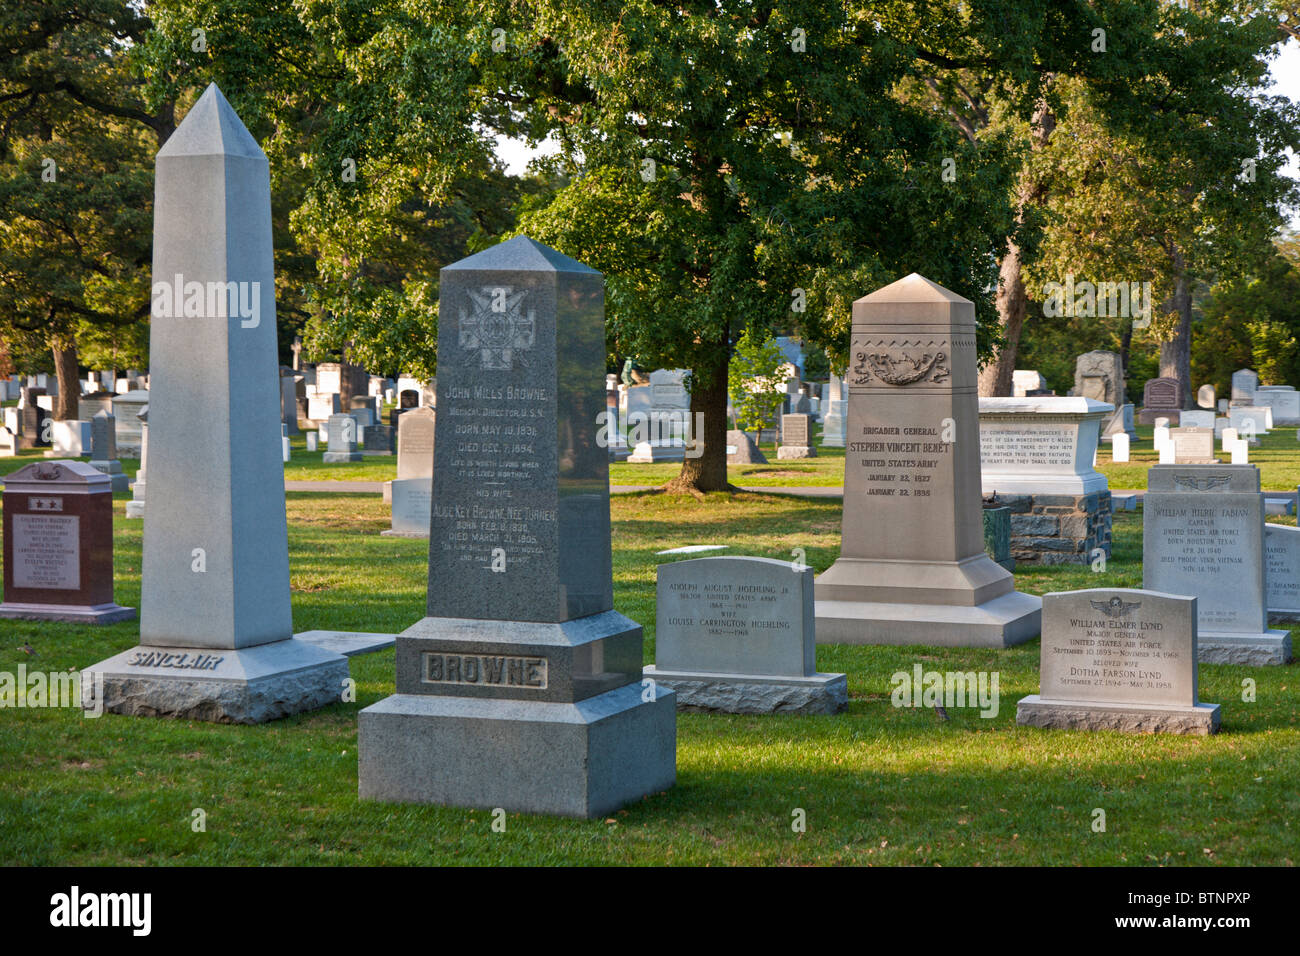 Arlington, VA - Sep 2009 - Headstones and memorials in Arlington National Cemetery in Arlington, Virginia Stock Photo